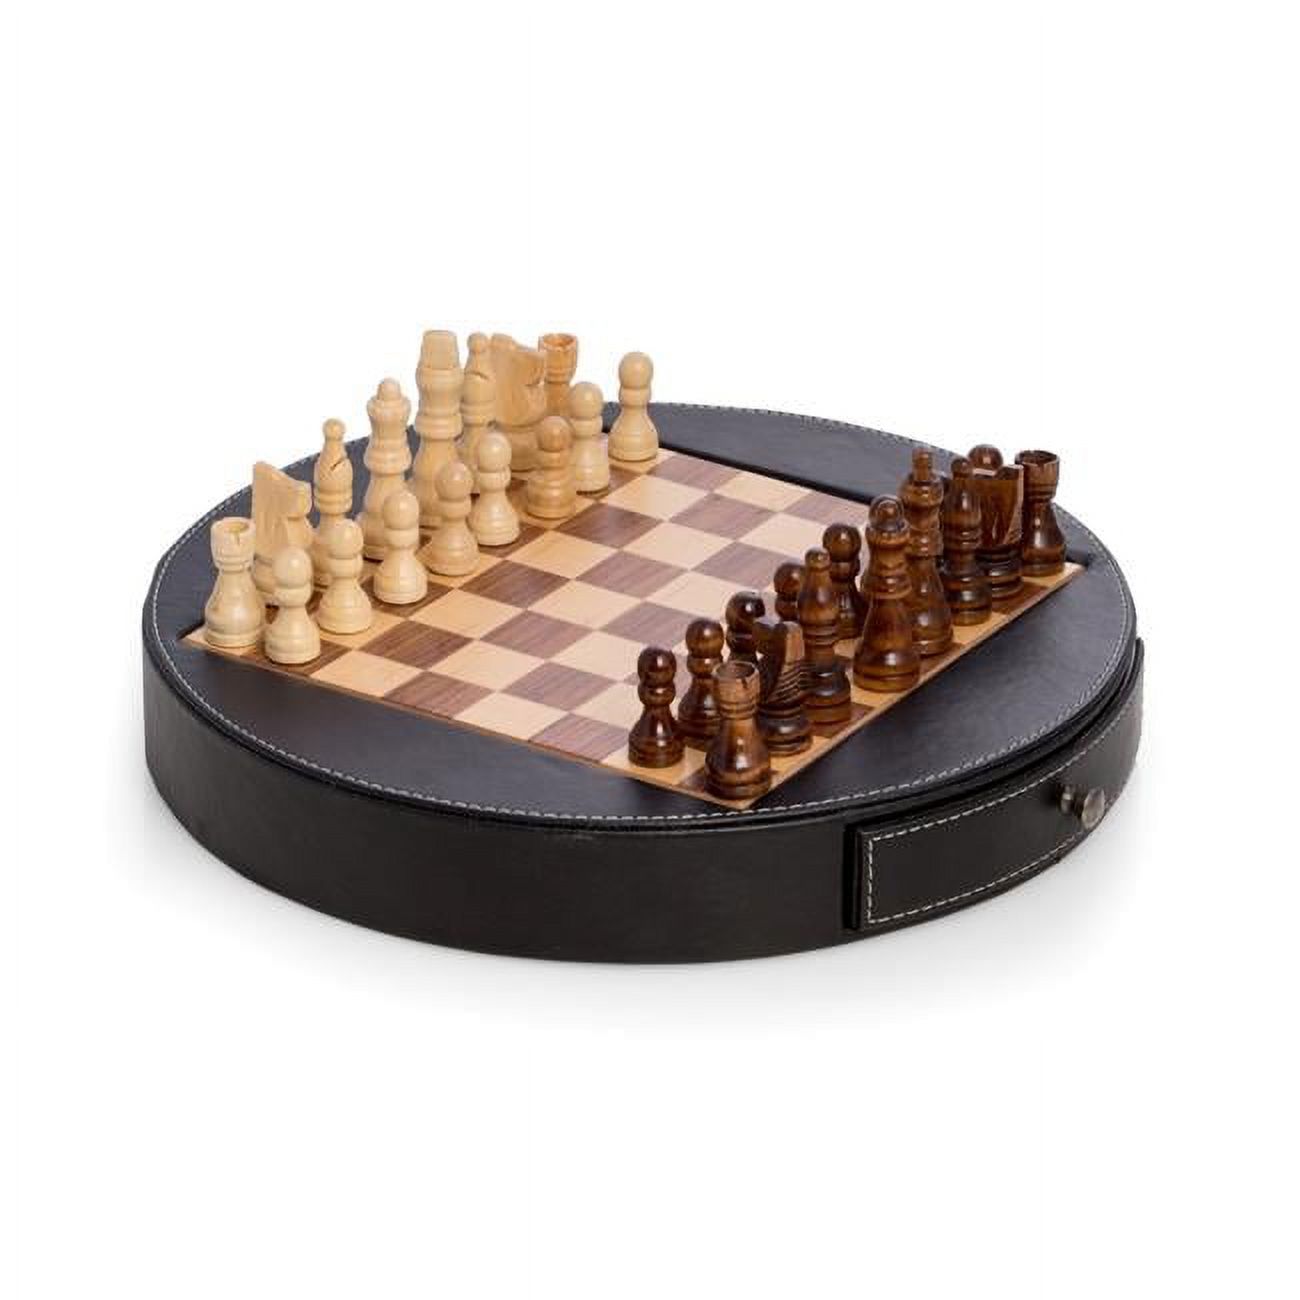 Bey-Berk International G545 Leather & Wood Chess Set, Black - image 1 of 4